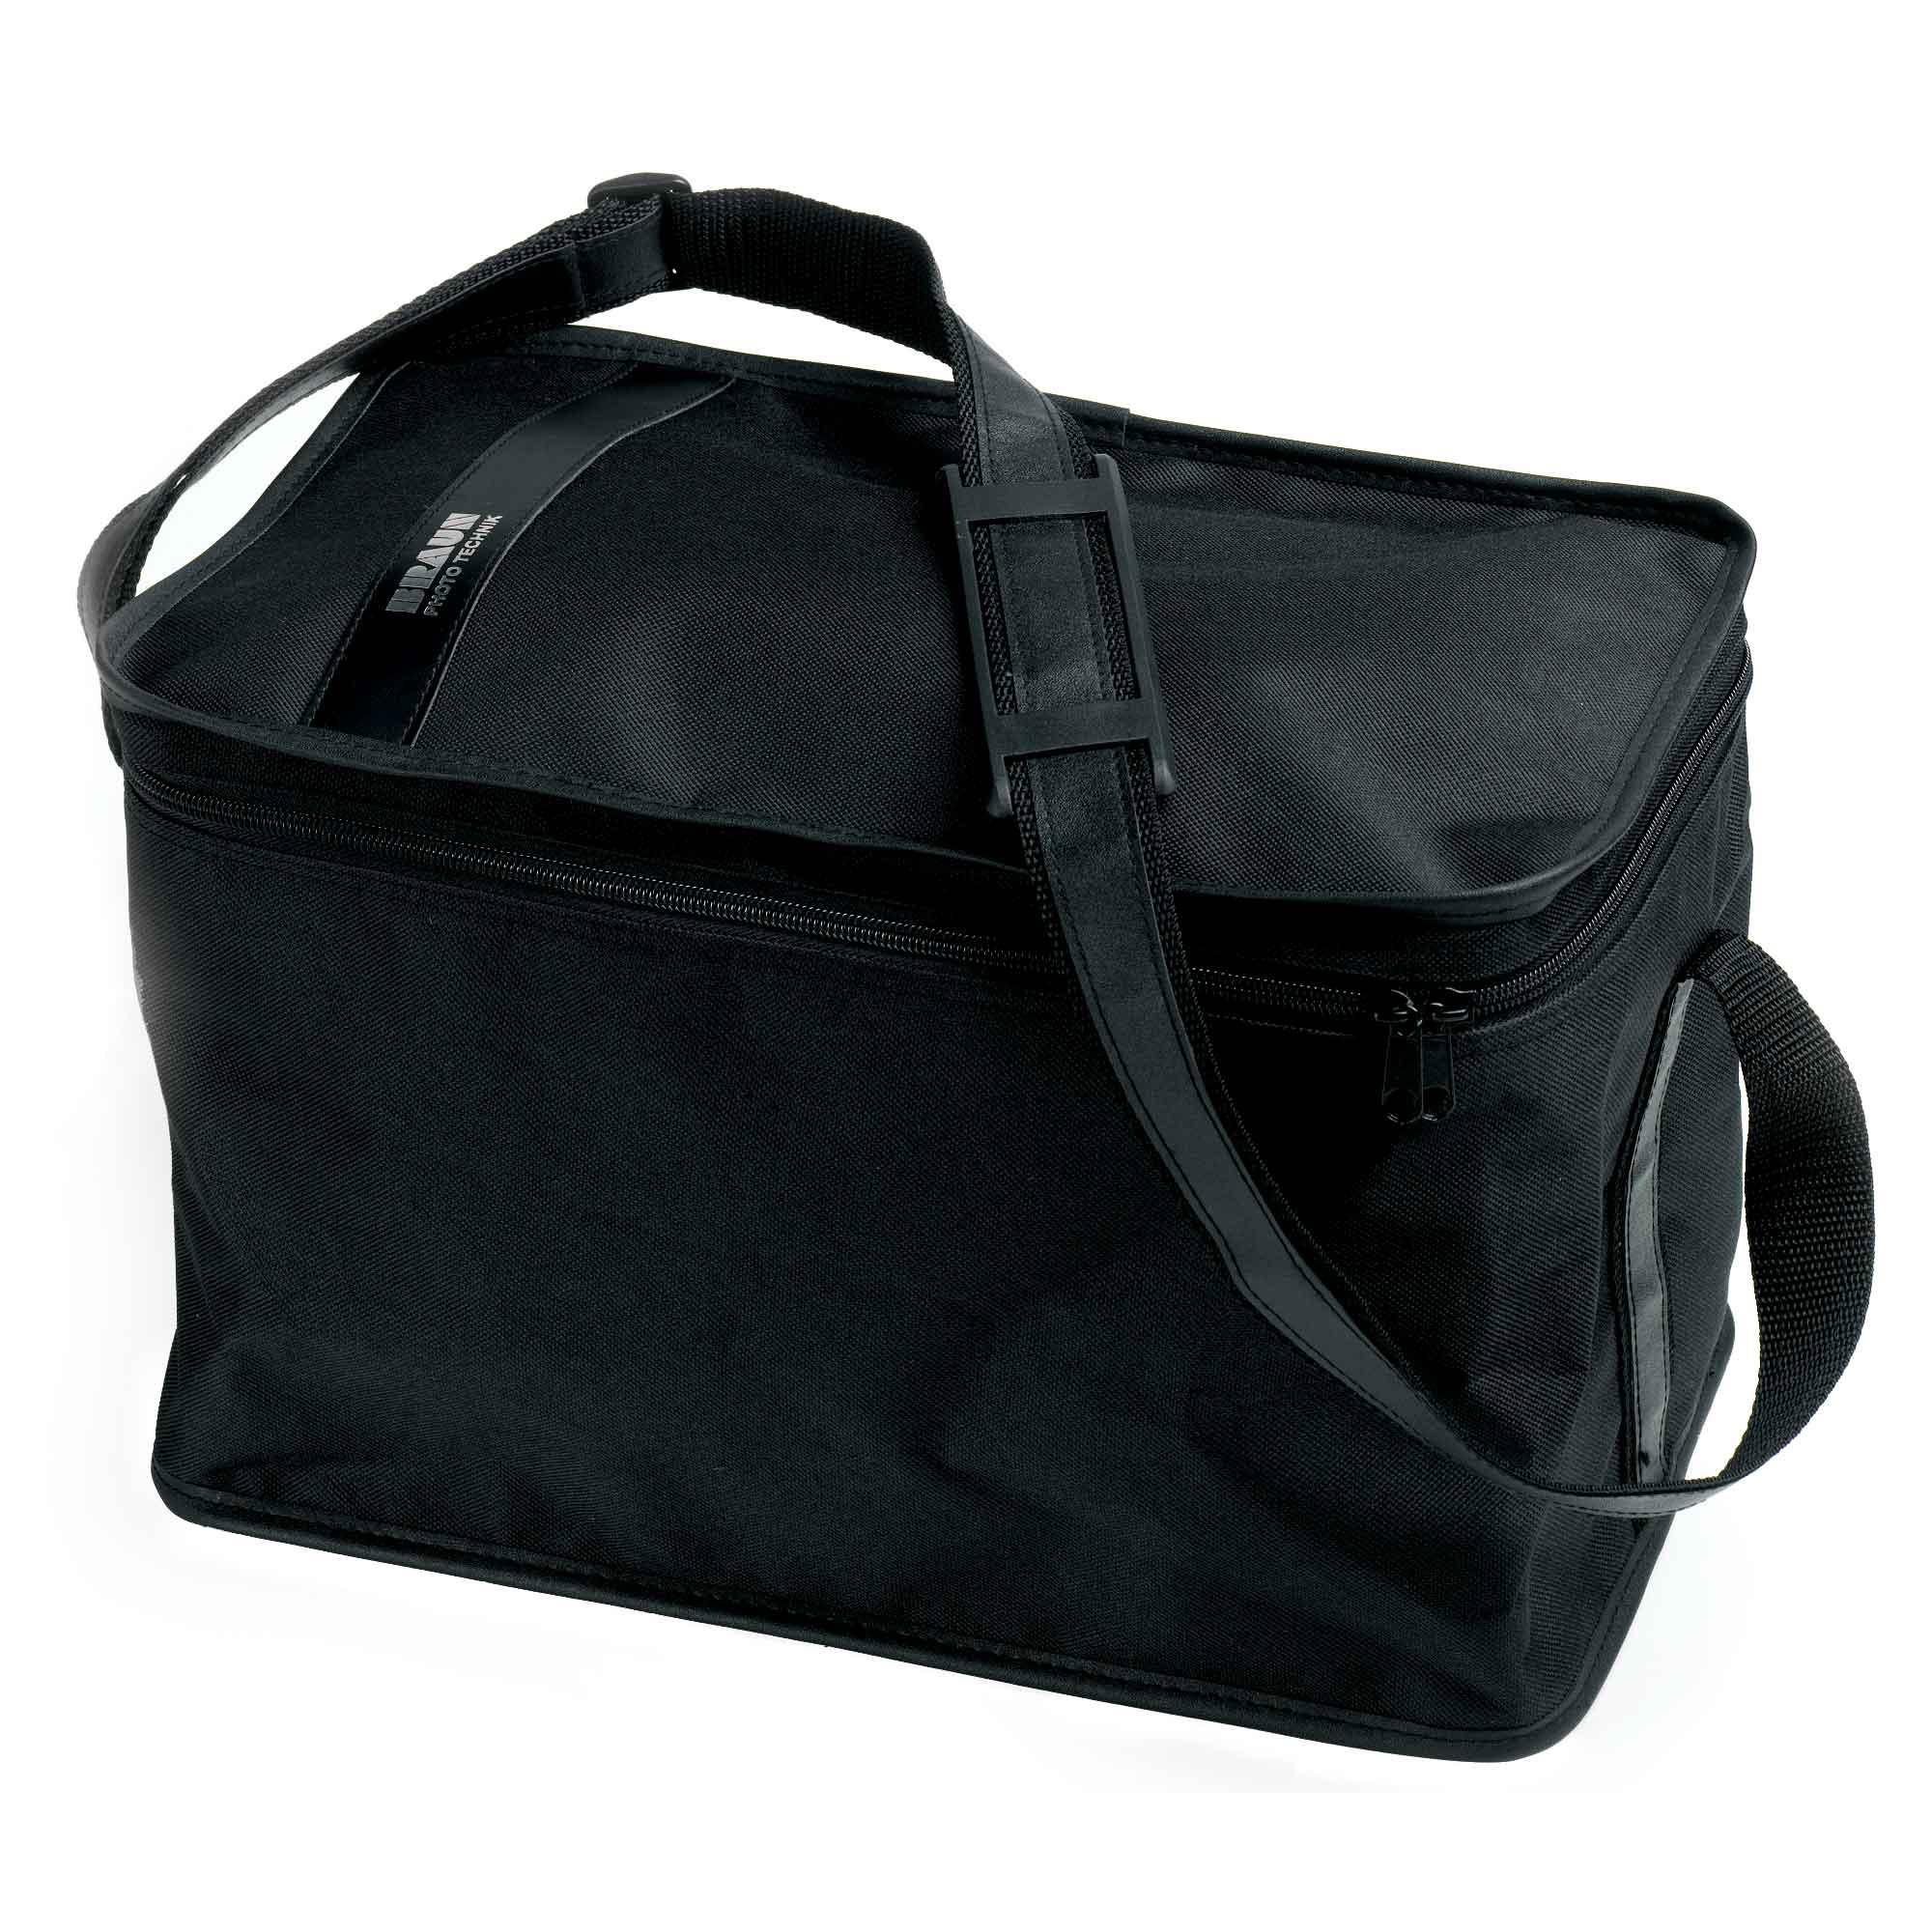 Black Episcope Carry Bag for any camera equipment